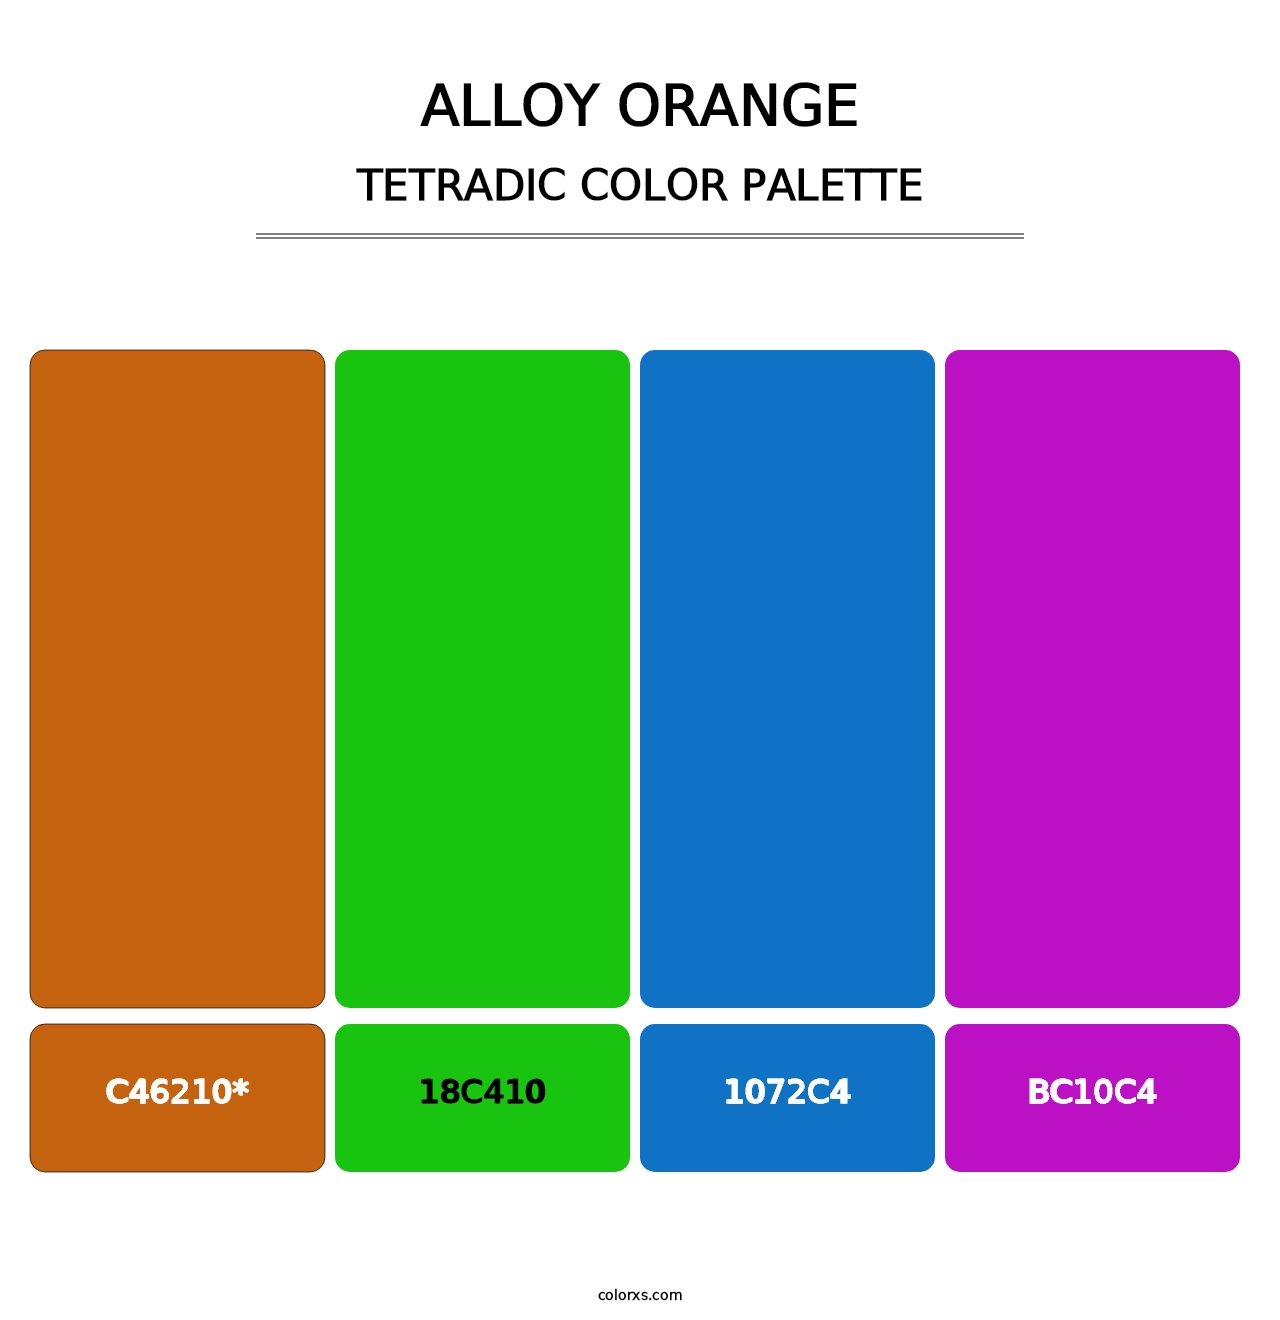 Alloy Orange - Tetradic Color Palette